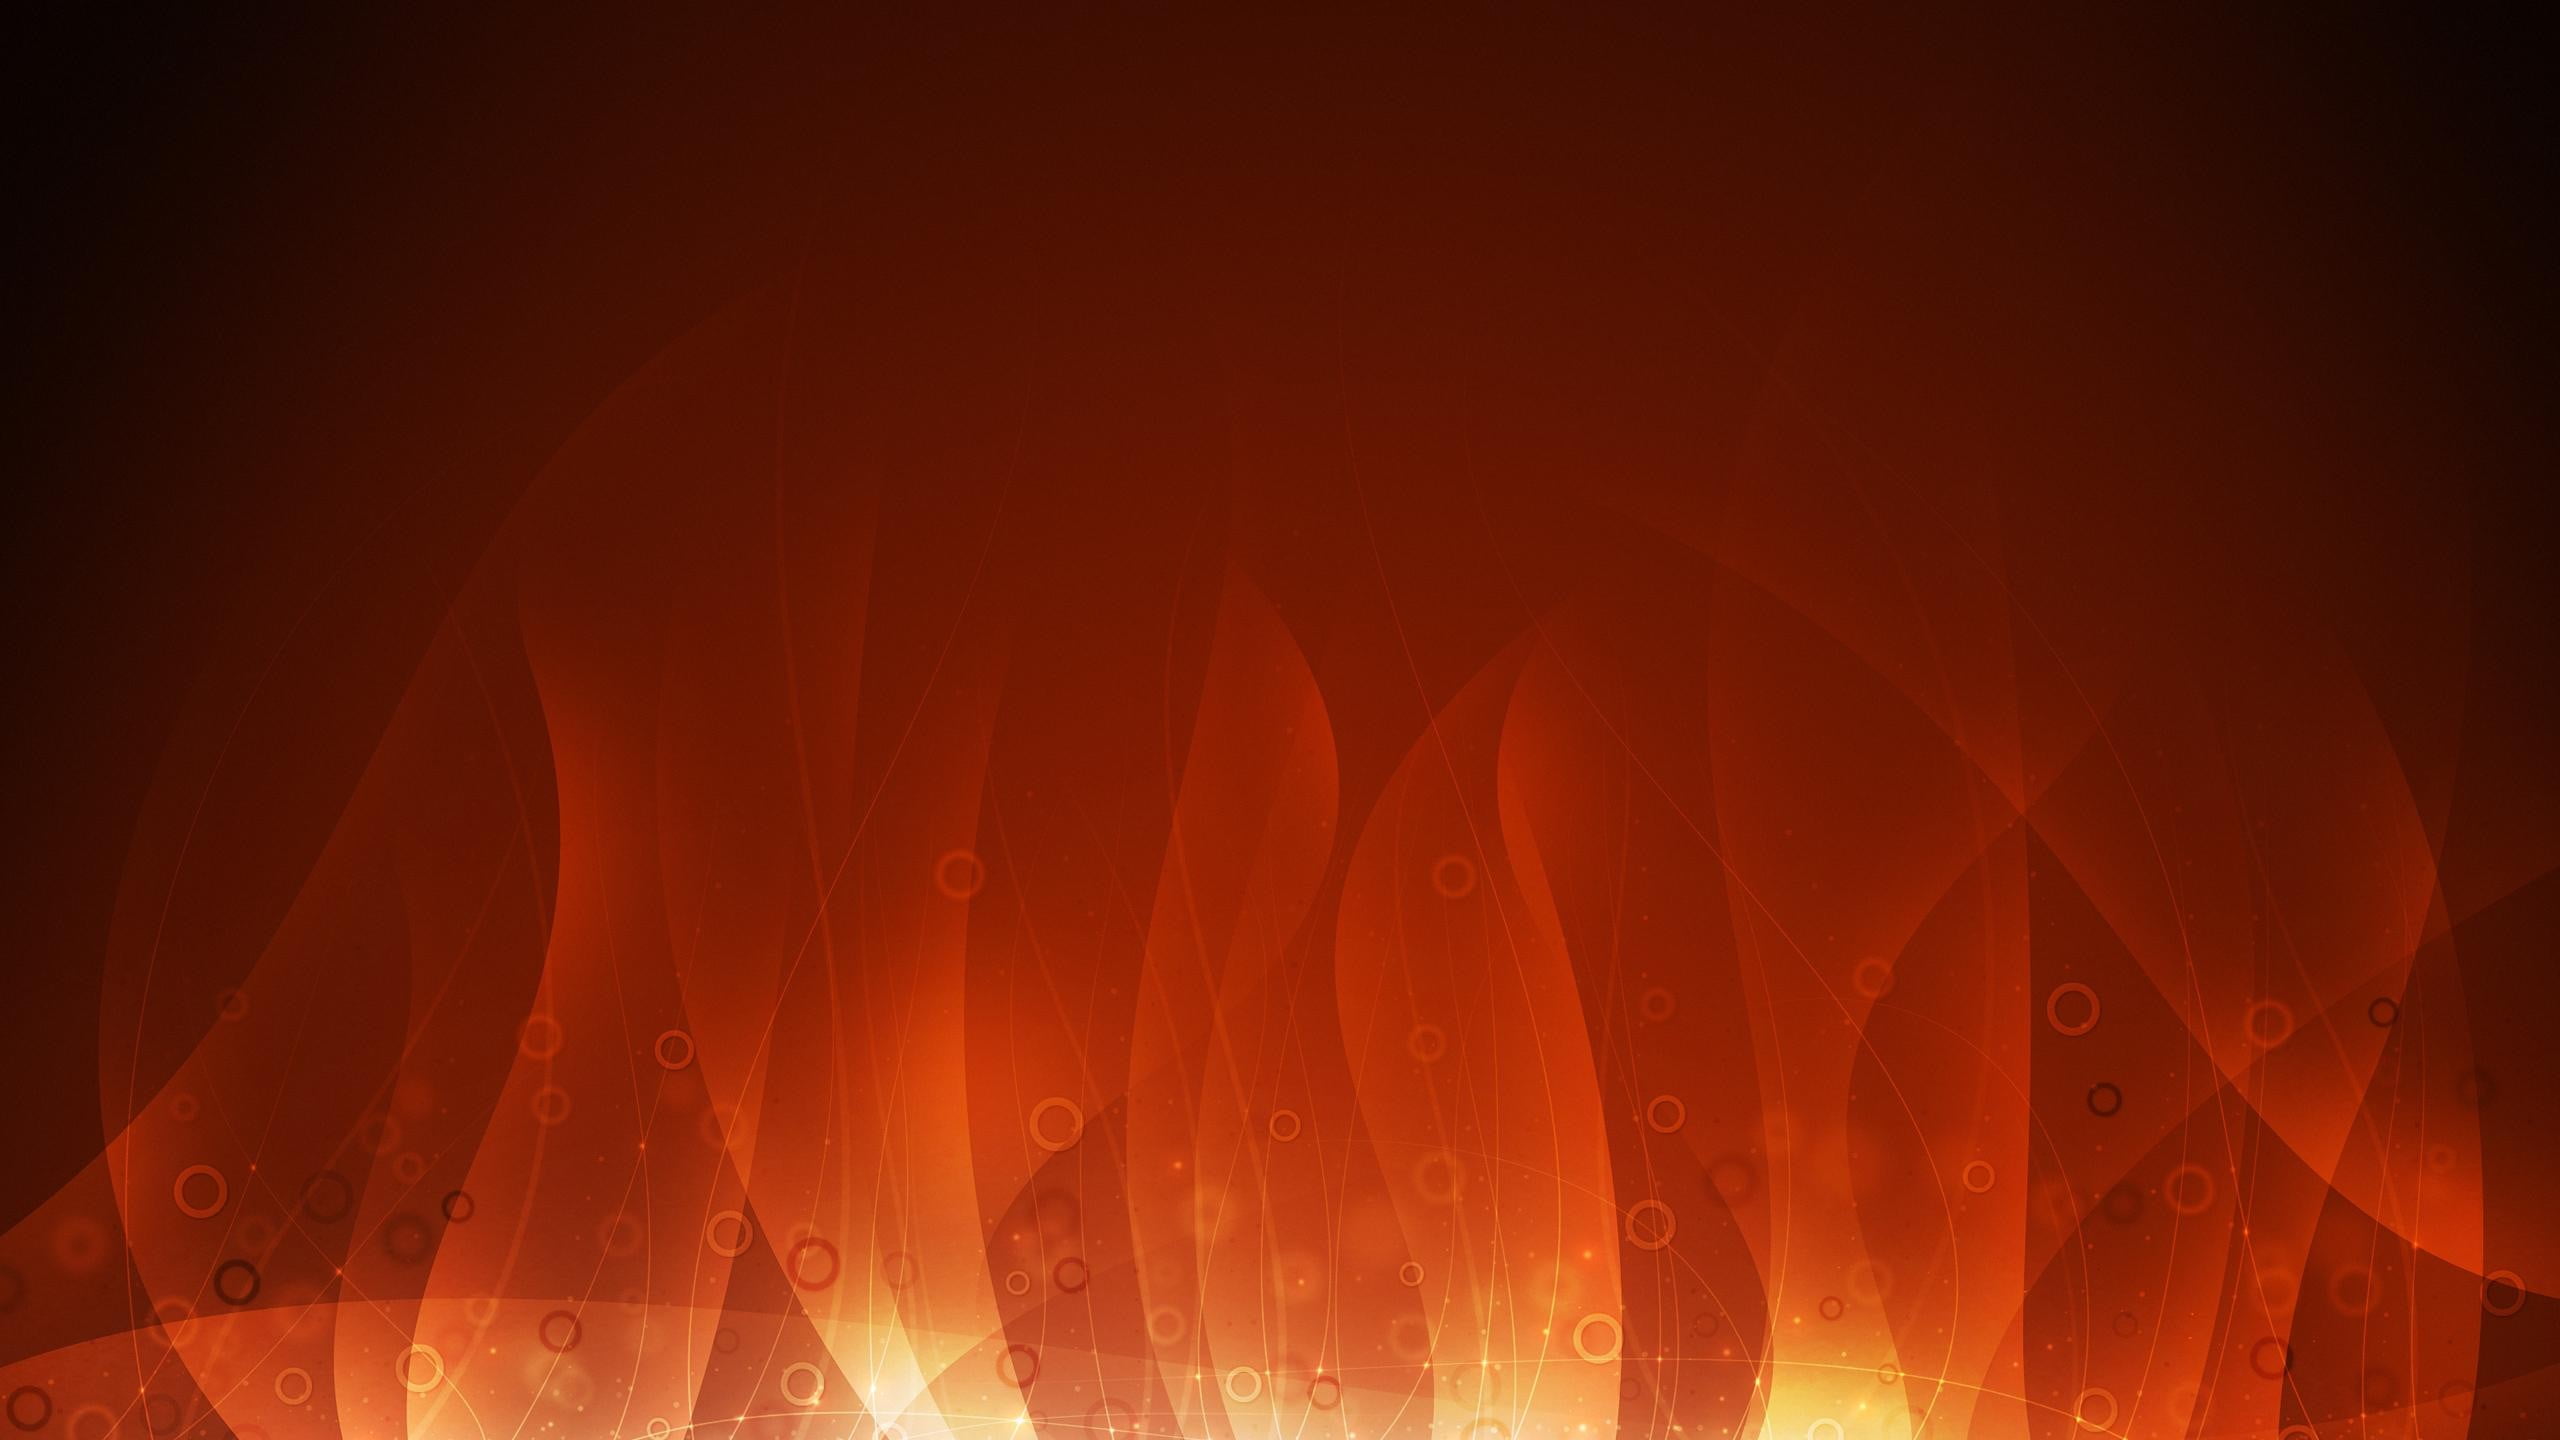 abstract fire wallpaper